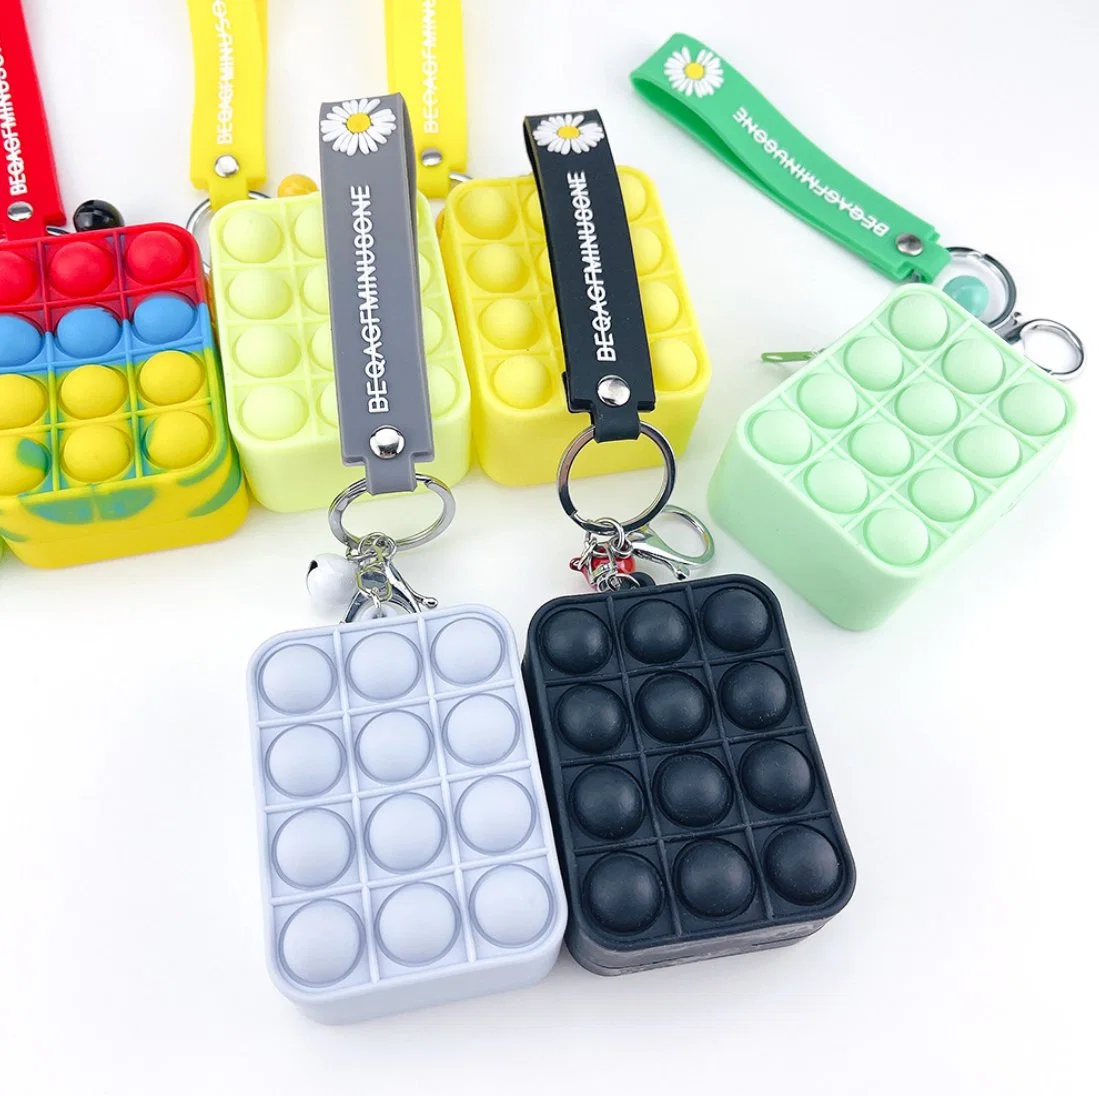 Pop-Brinquedos Figet Coin Bolsas Mini em silicone macio Wallet Bags Filhos de brinquedo